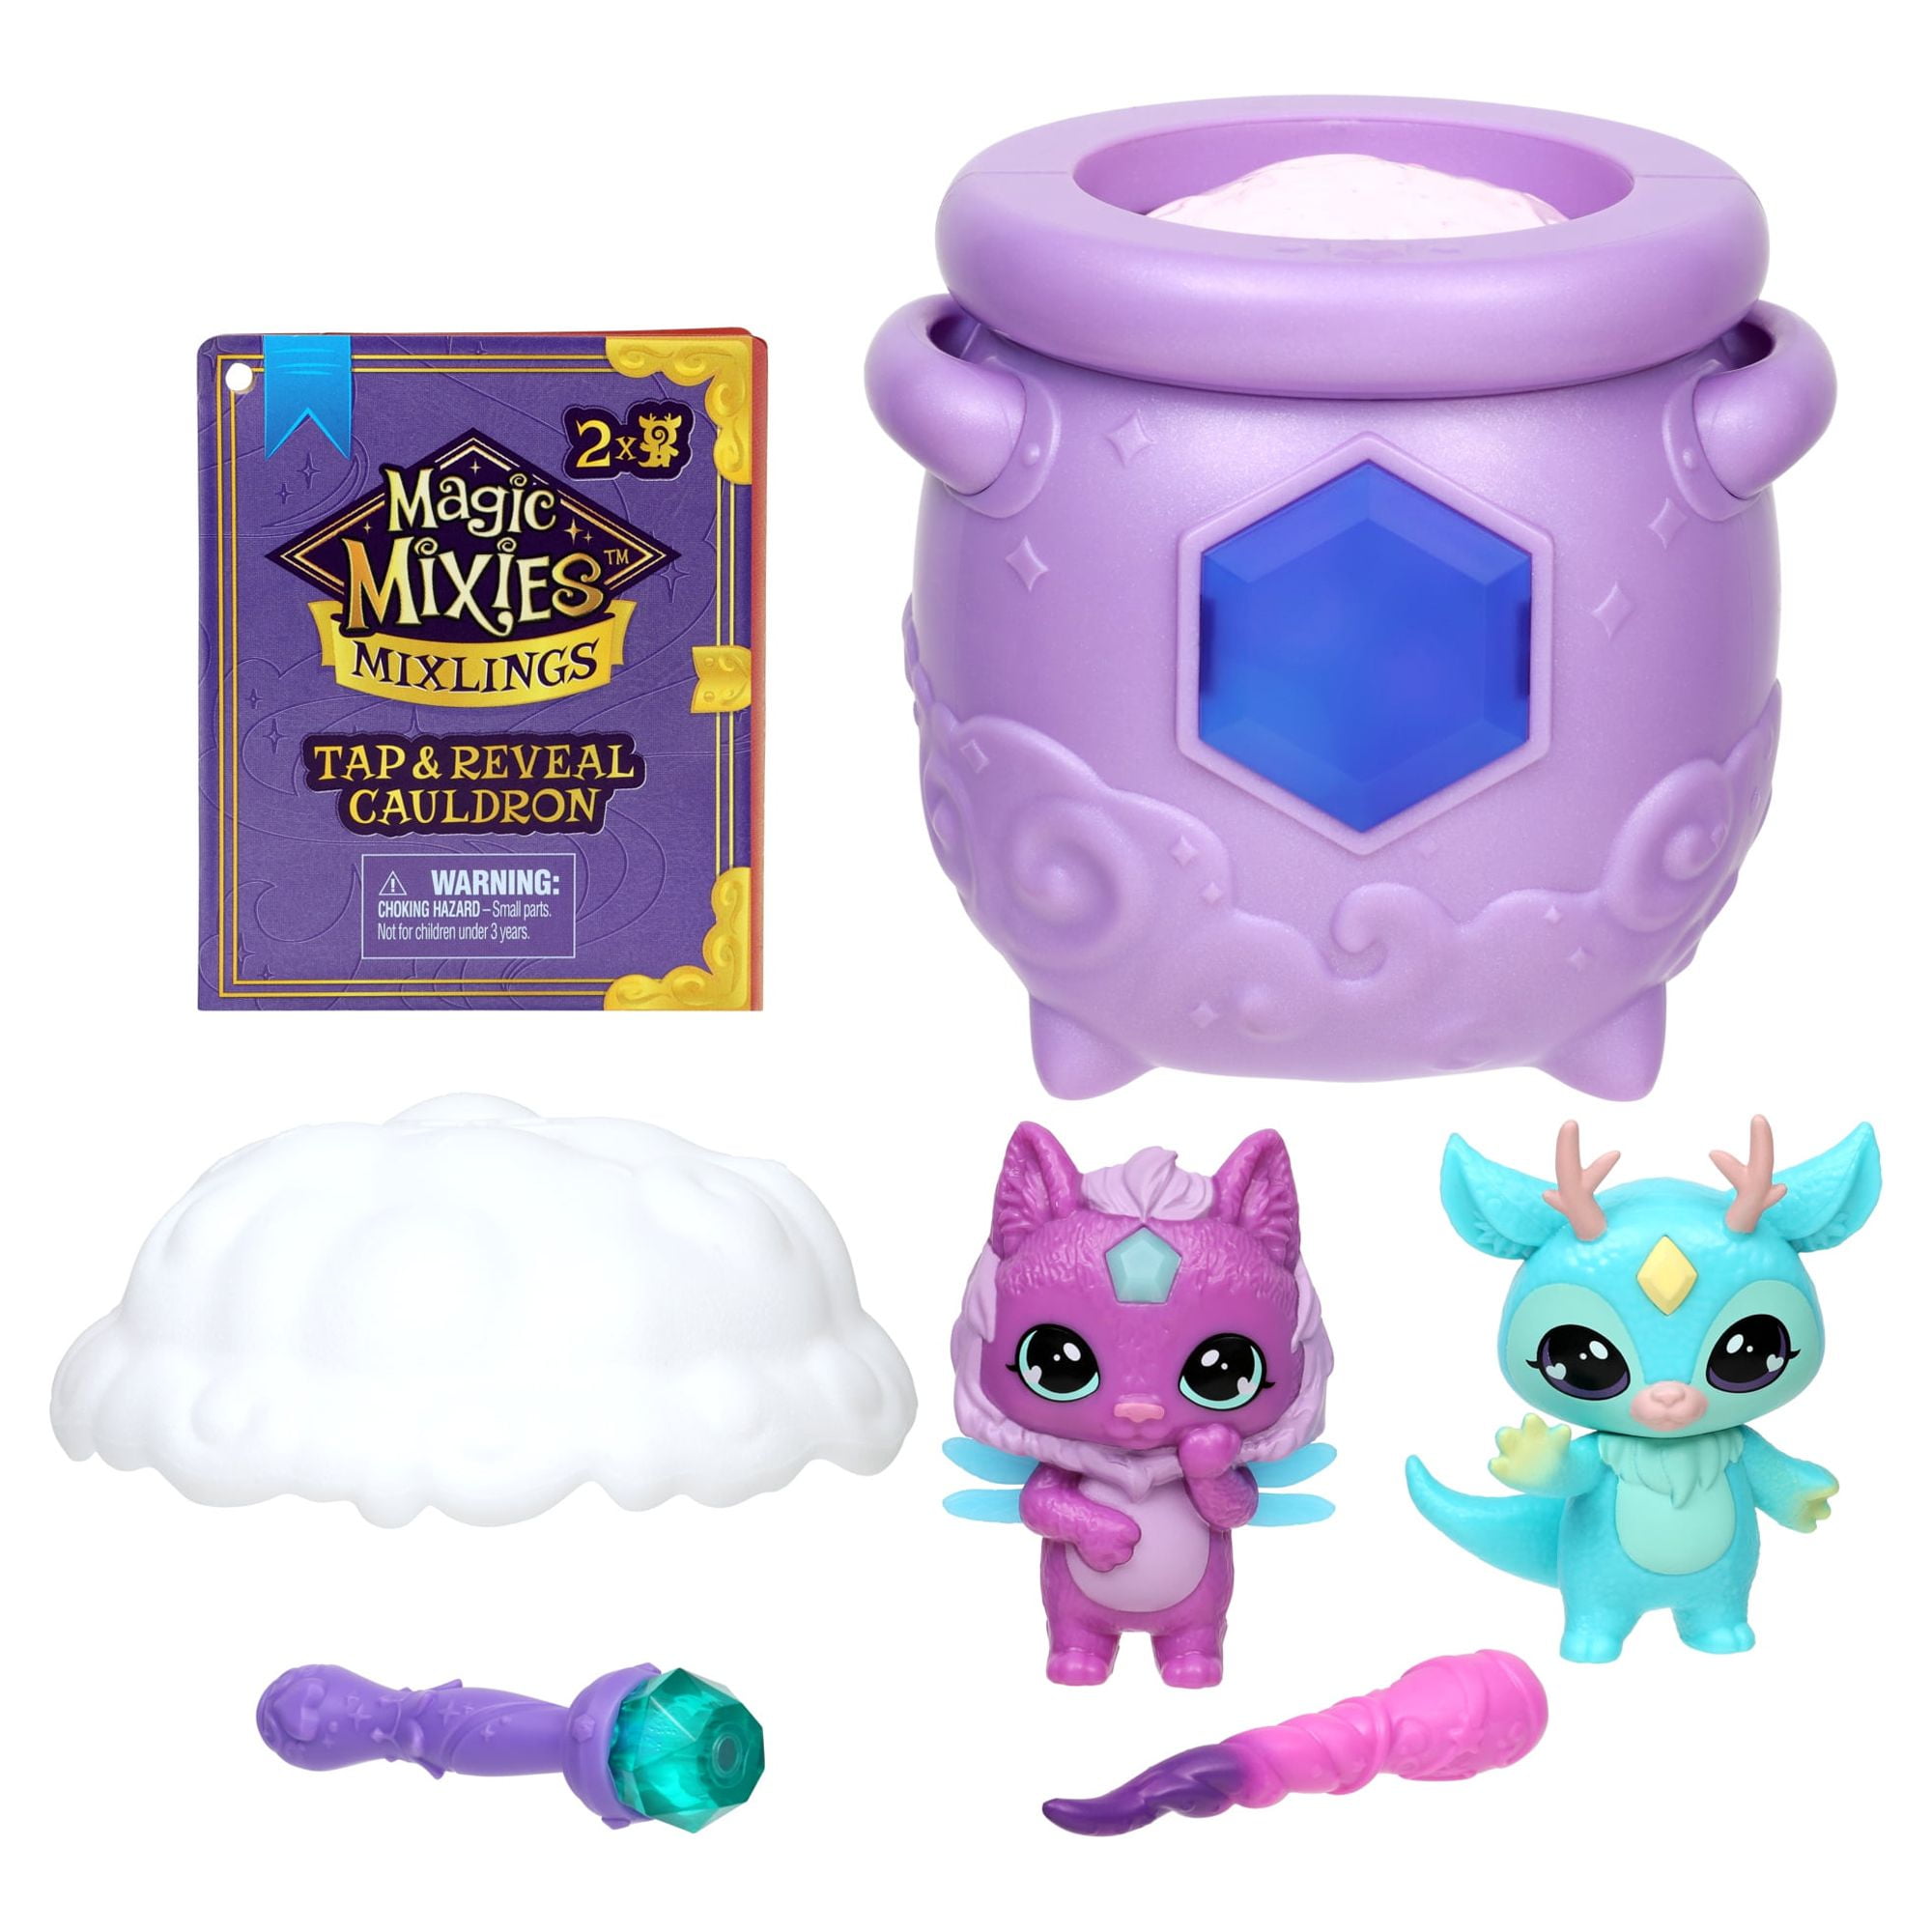 magic mixies™ mixlings collectors cauldron surprise toy